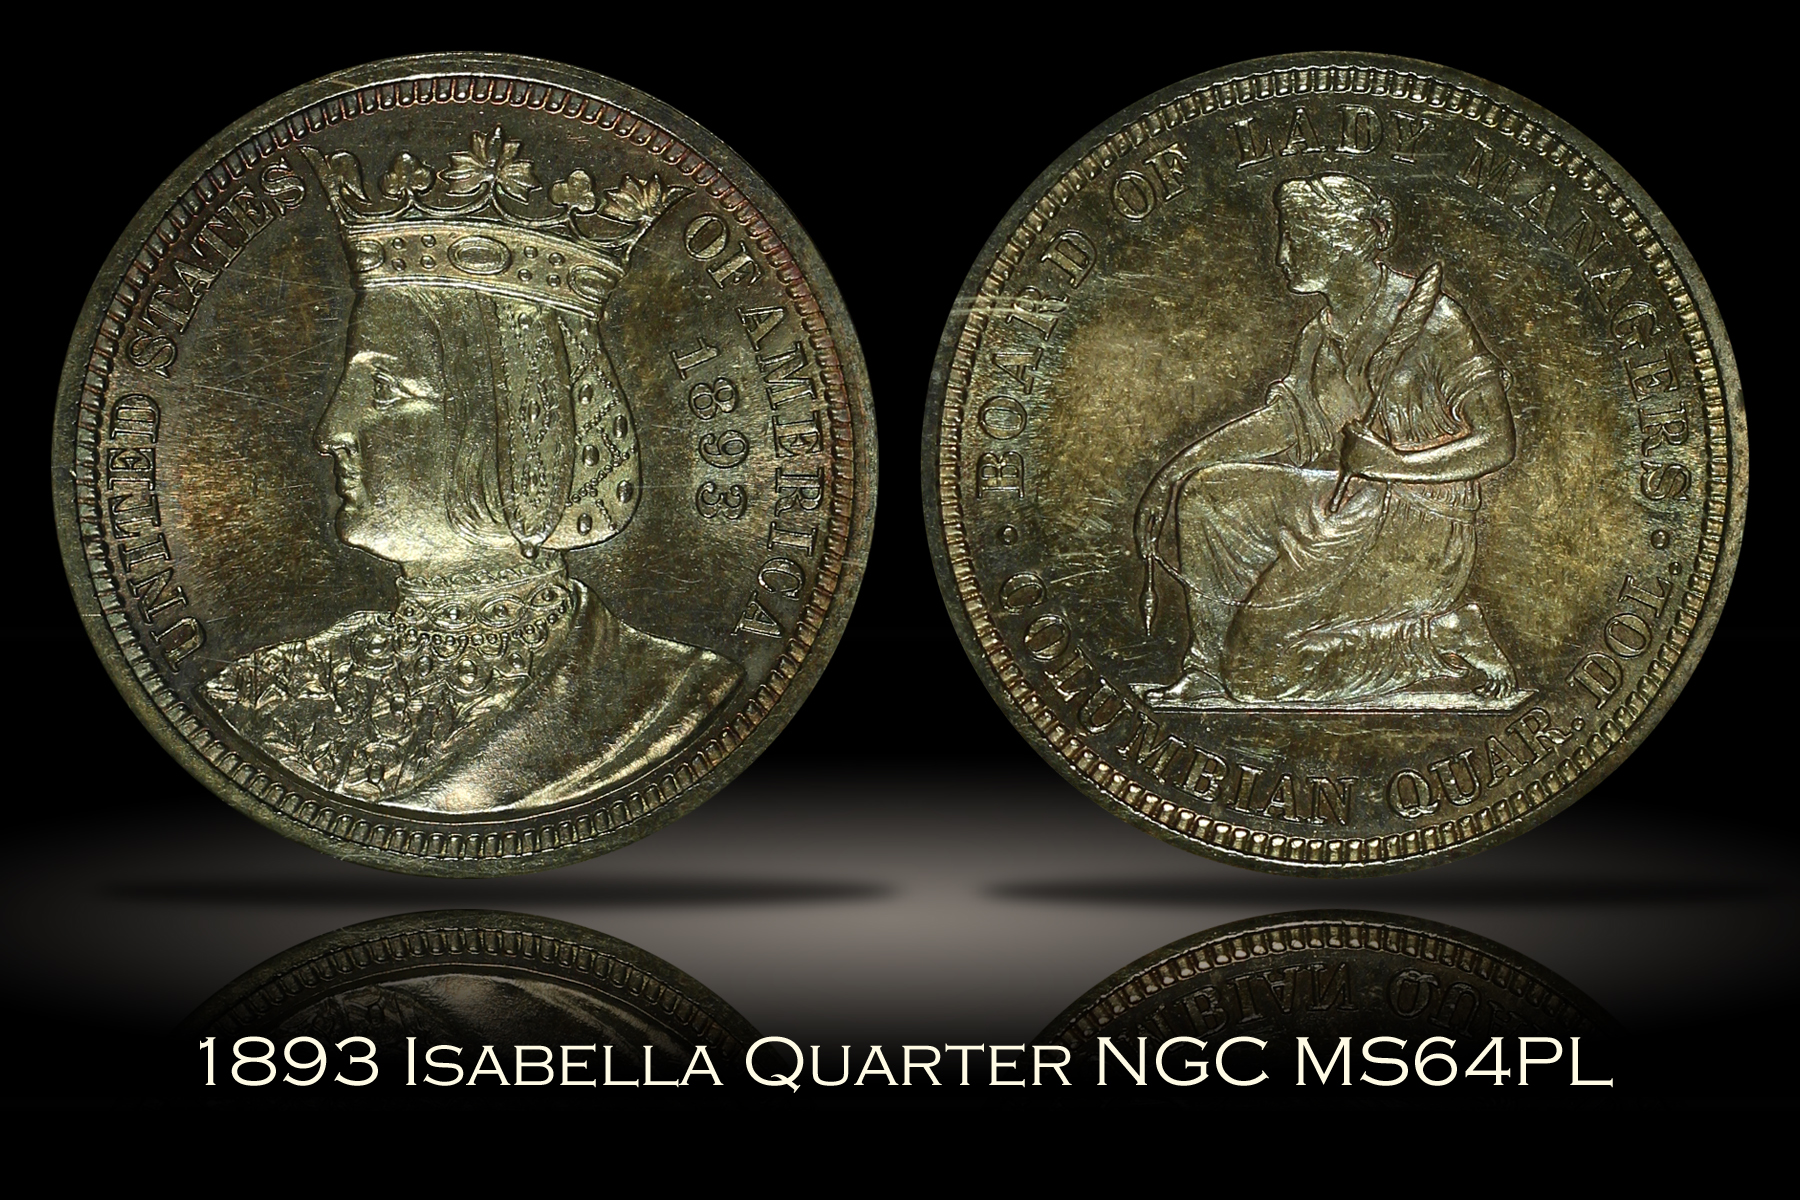 1893 Isabella Quarter NGC MS64PL